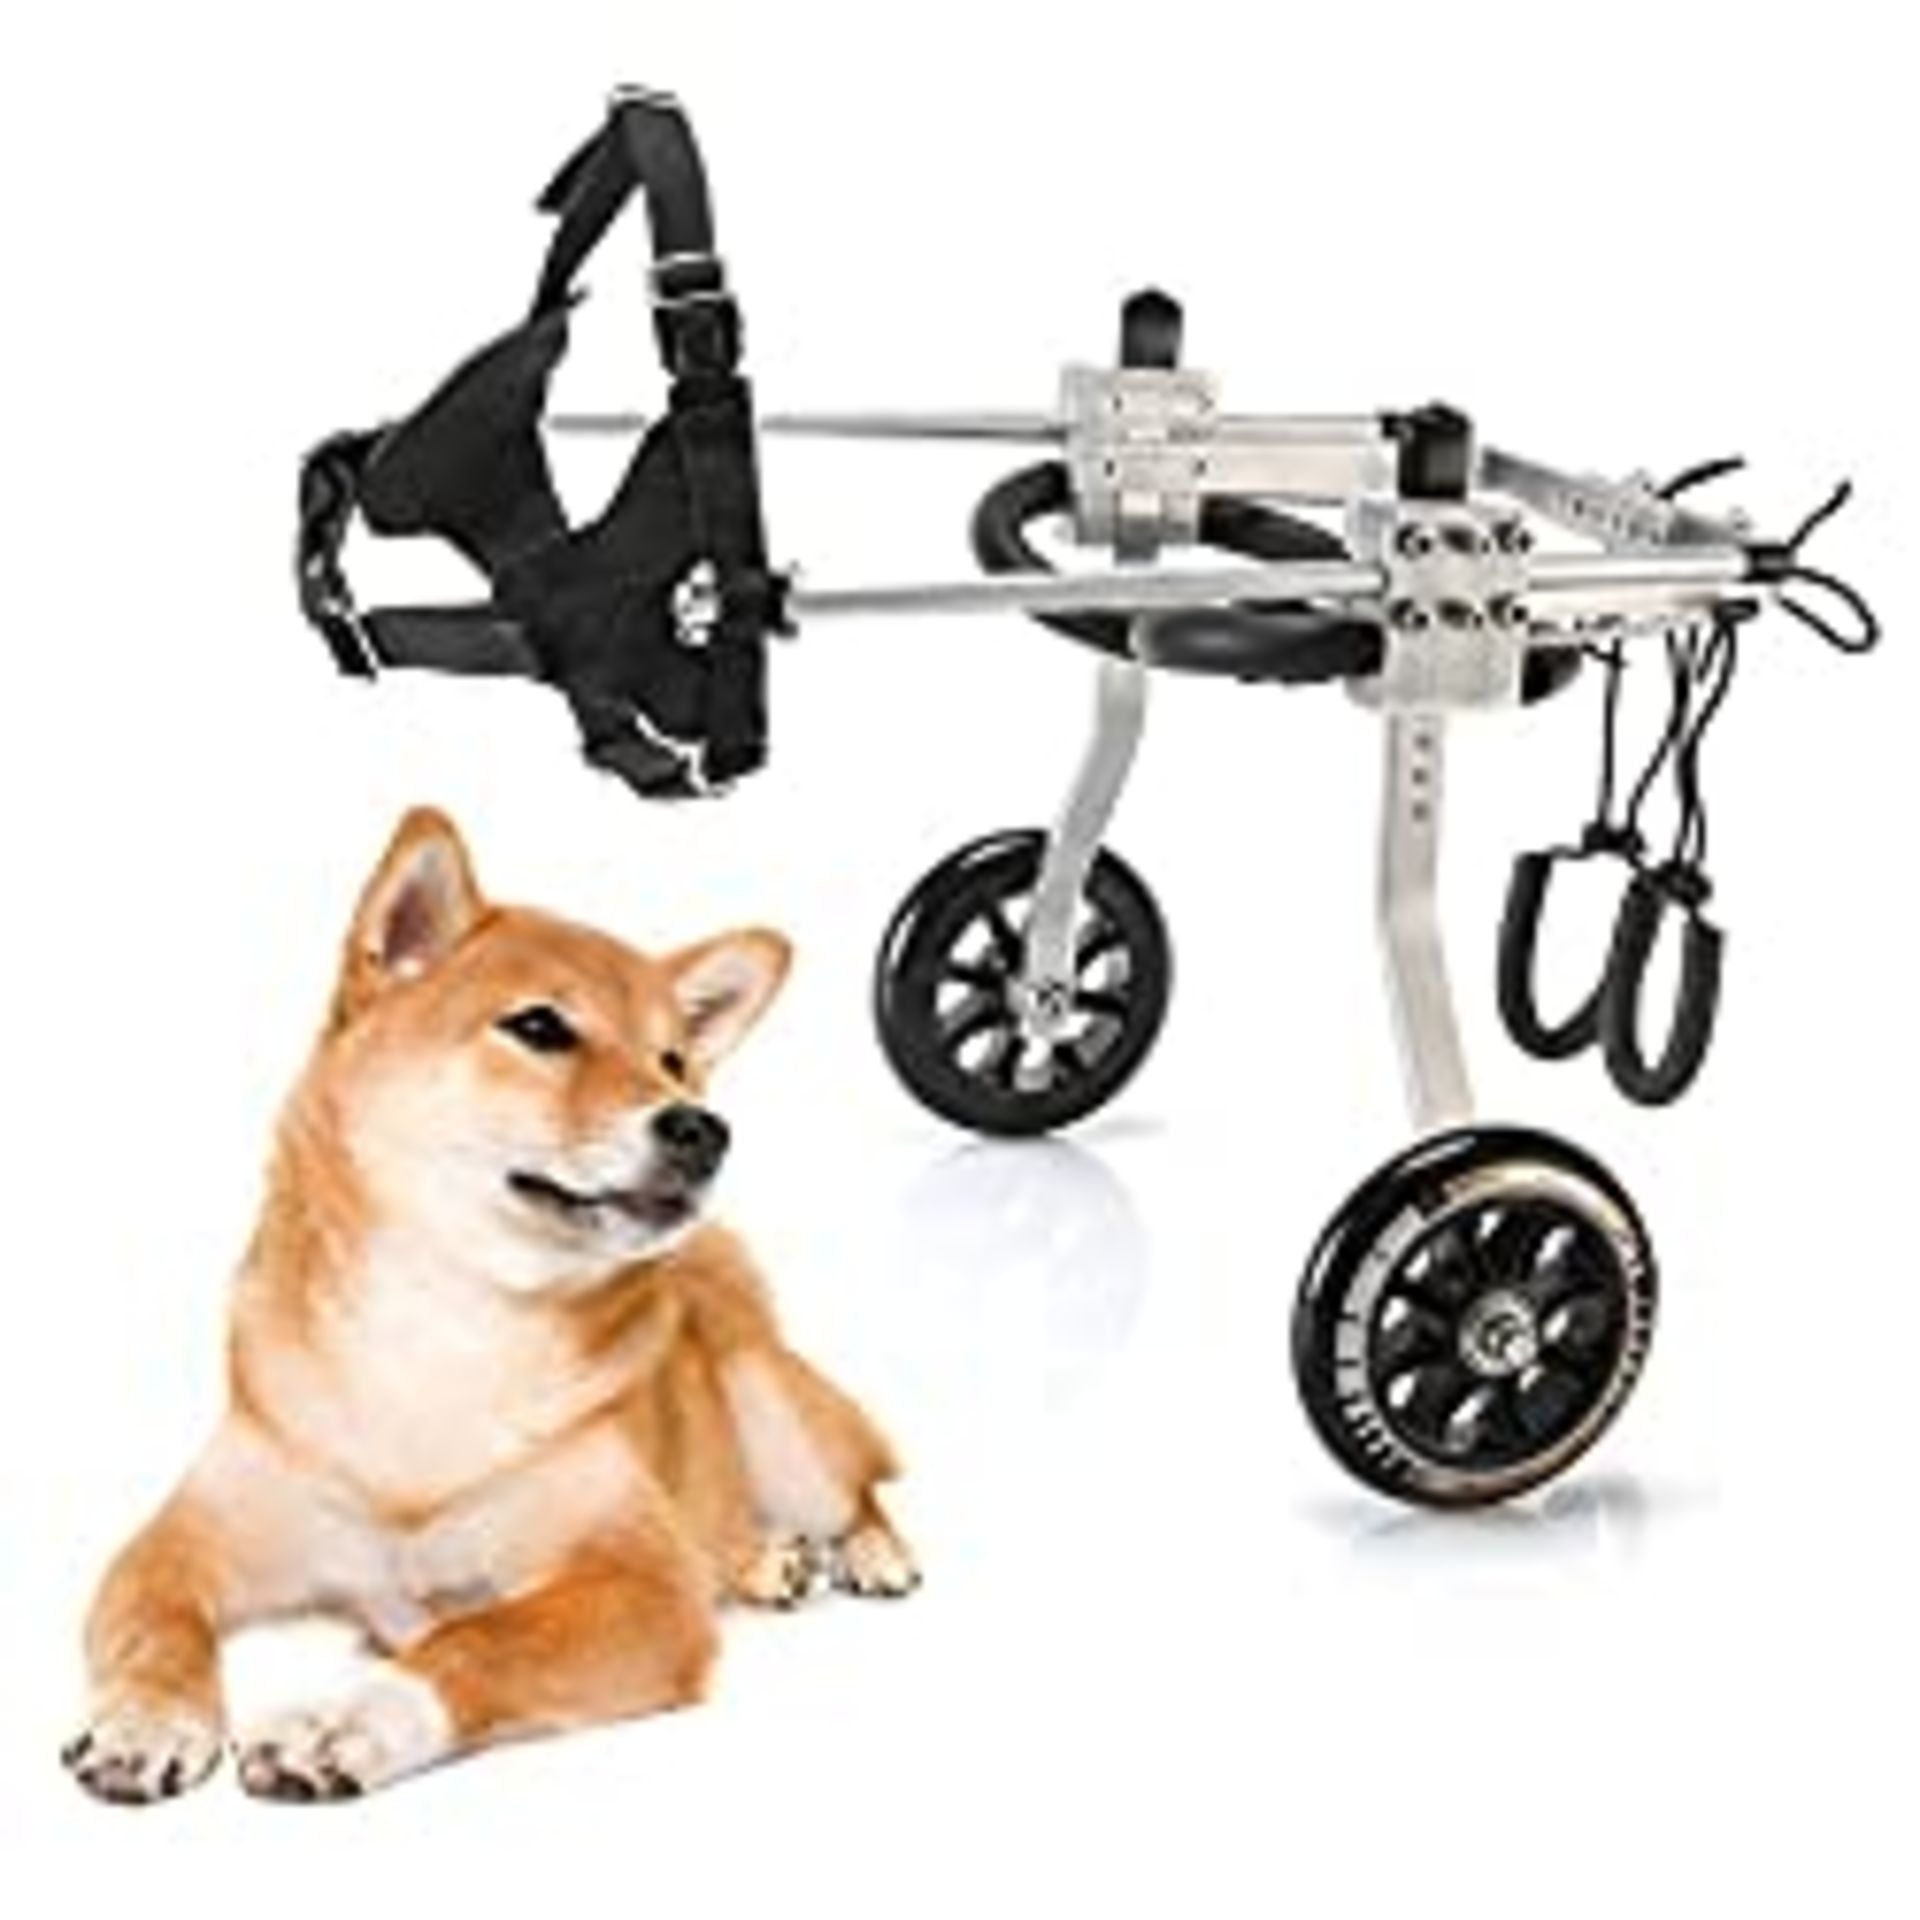 RRP £68.99 Anmas Power Dog Wheelchair Hind Legs Rehabilitation Aid for Aging